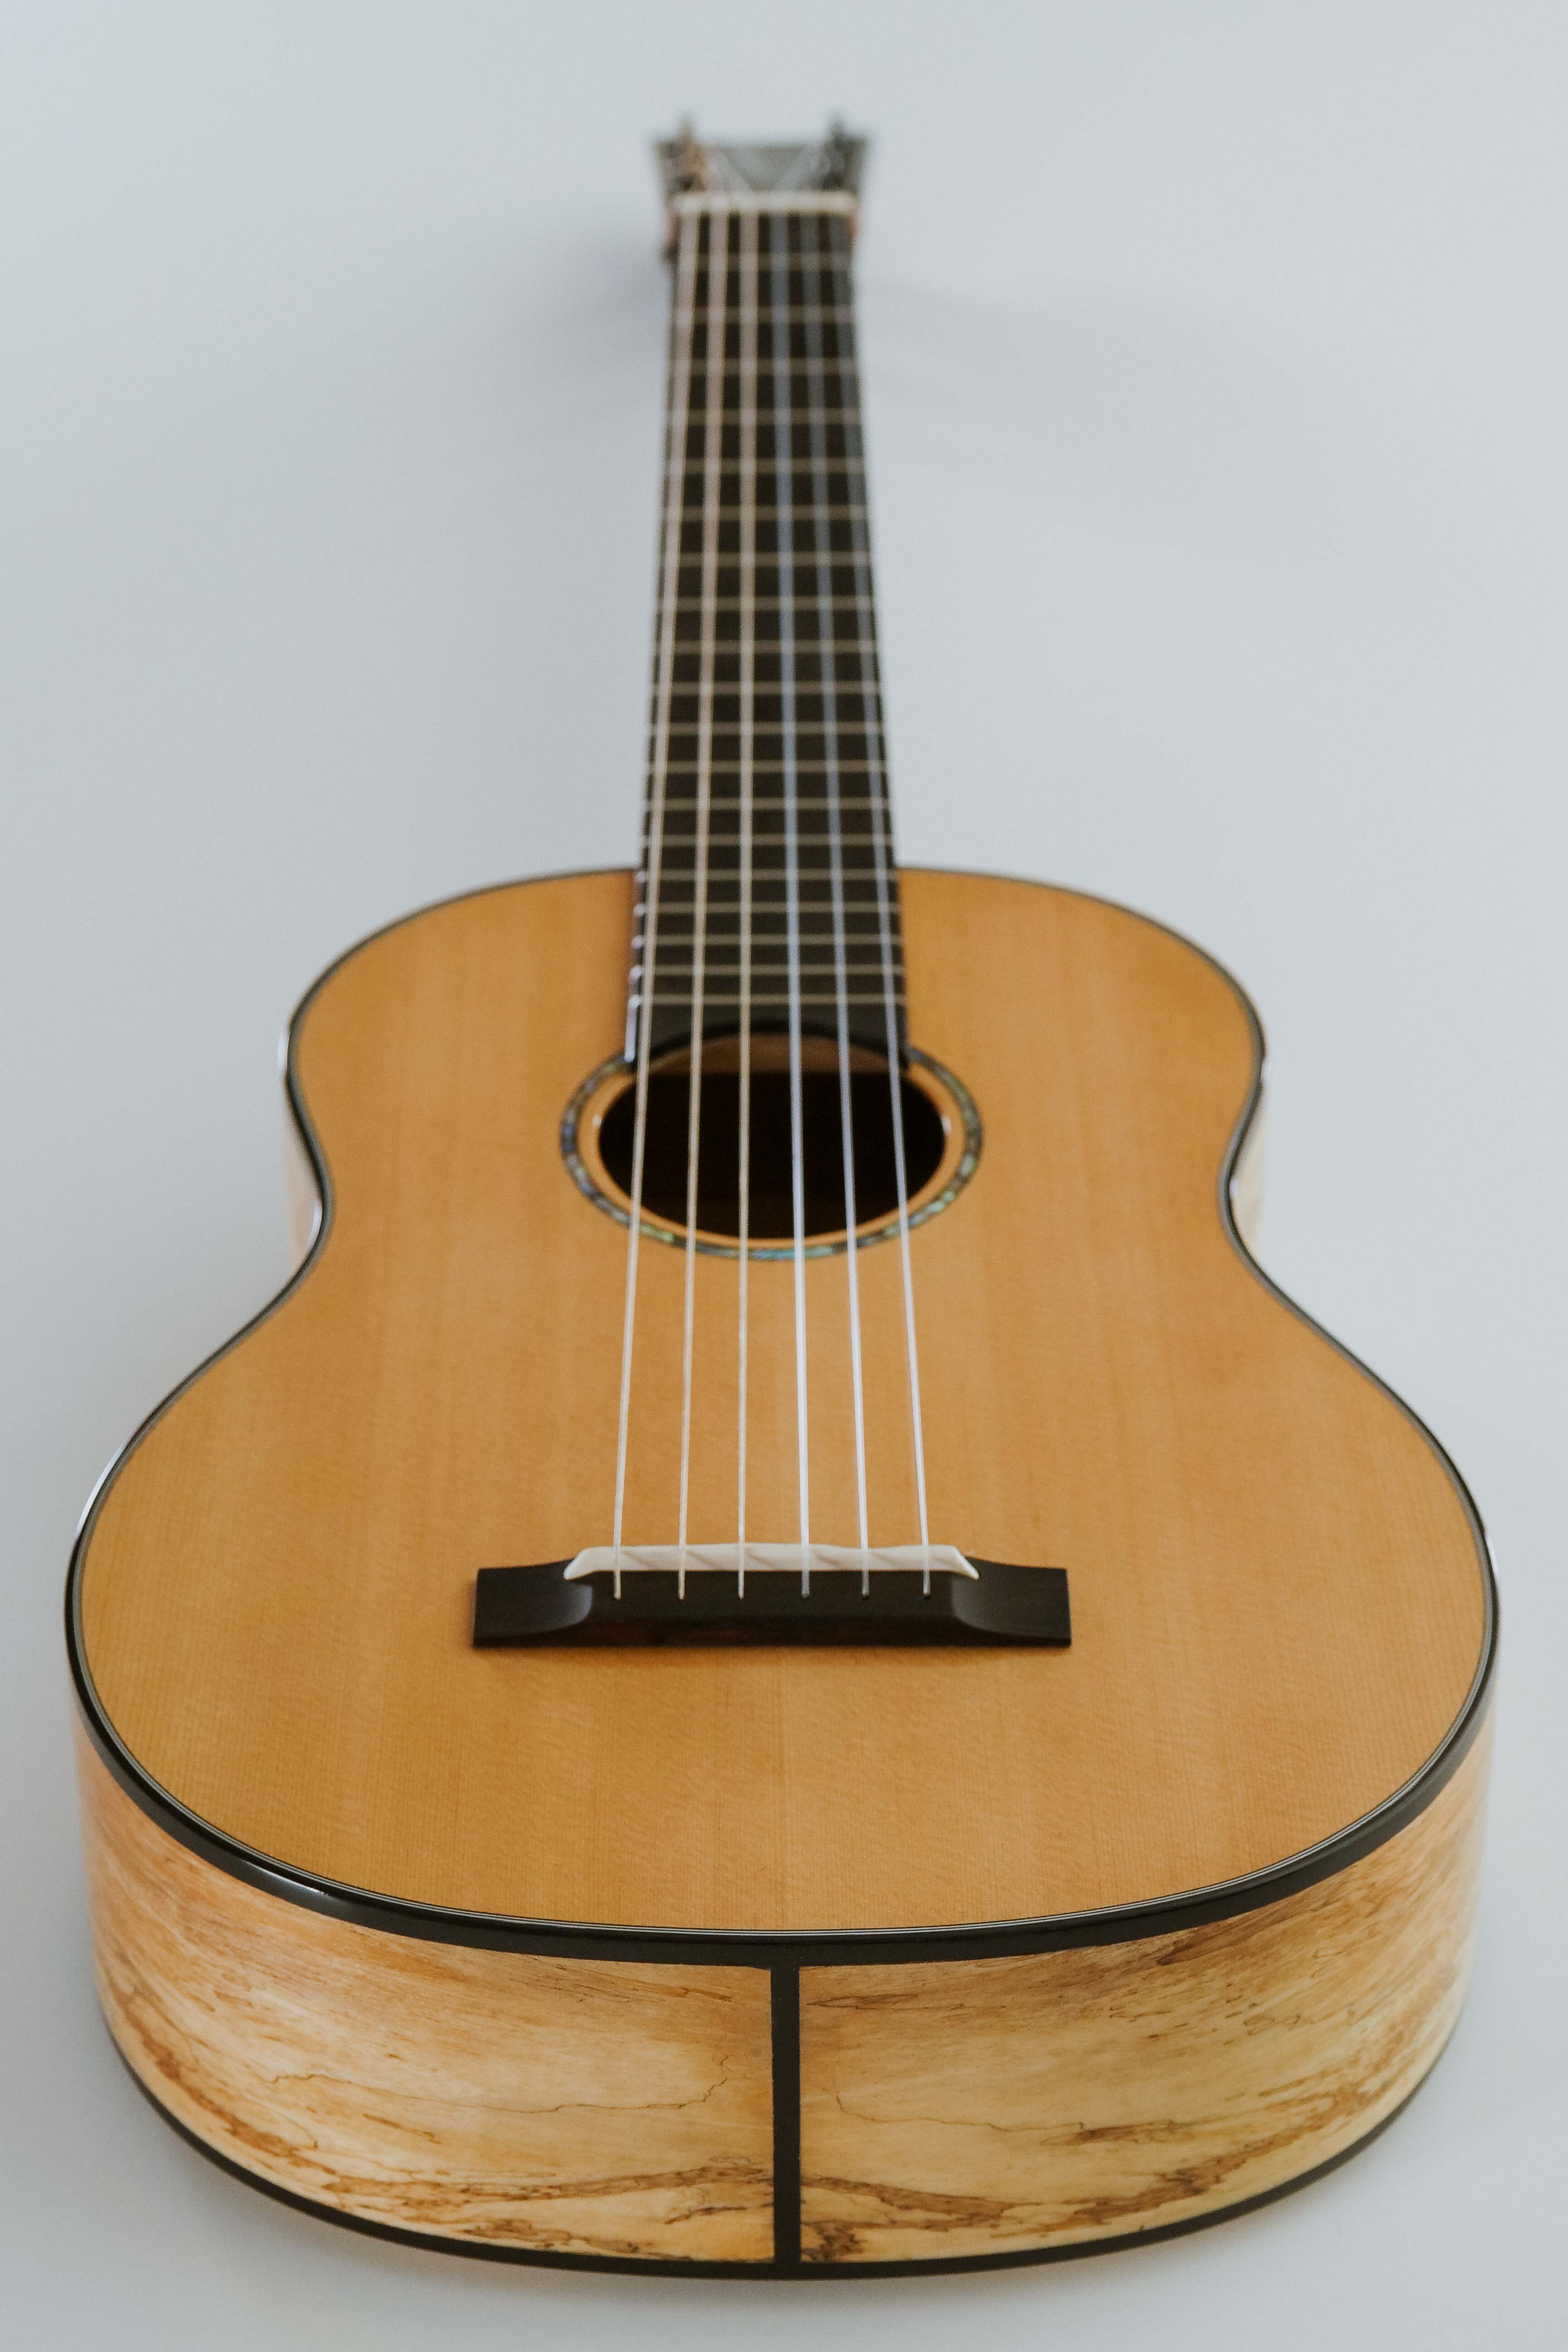 Romero Creations RC-P6-SMG Parlor Guitar "Lanat" - LAST ONE